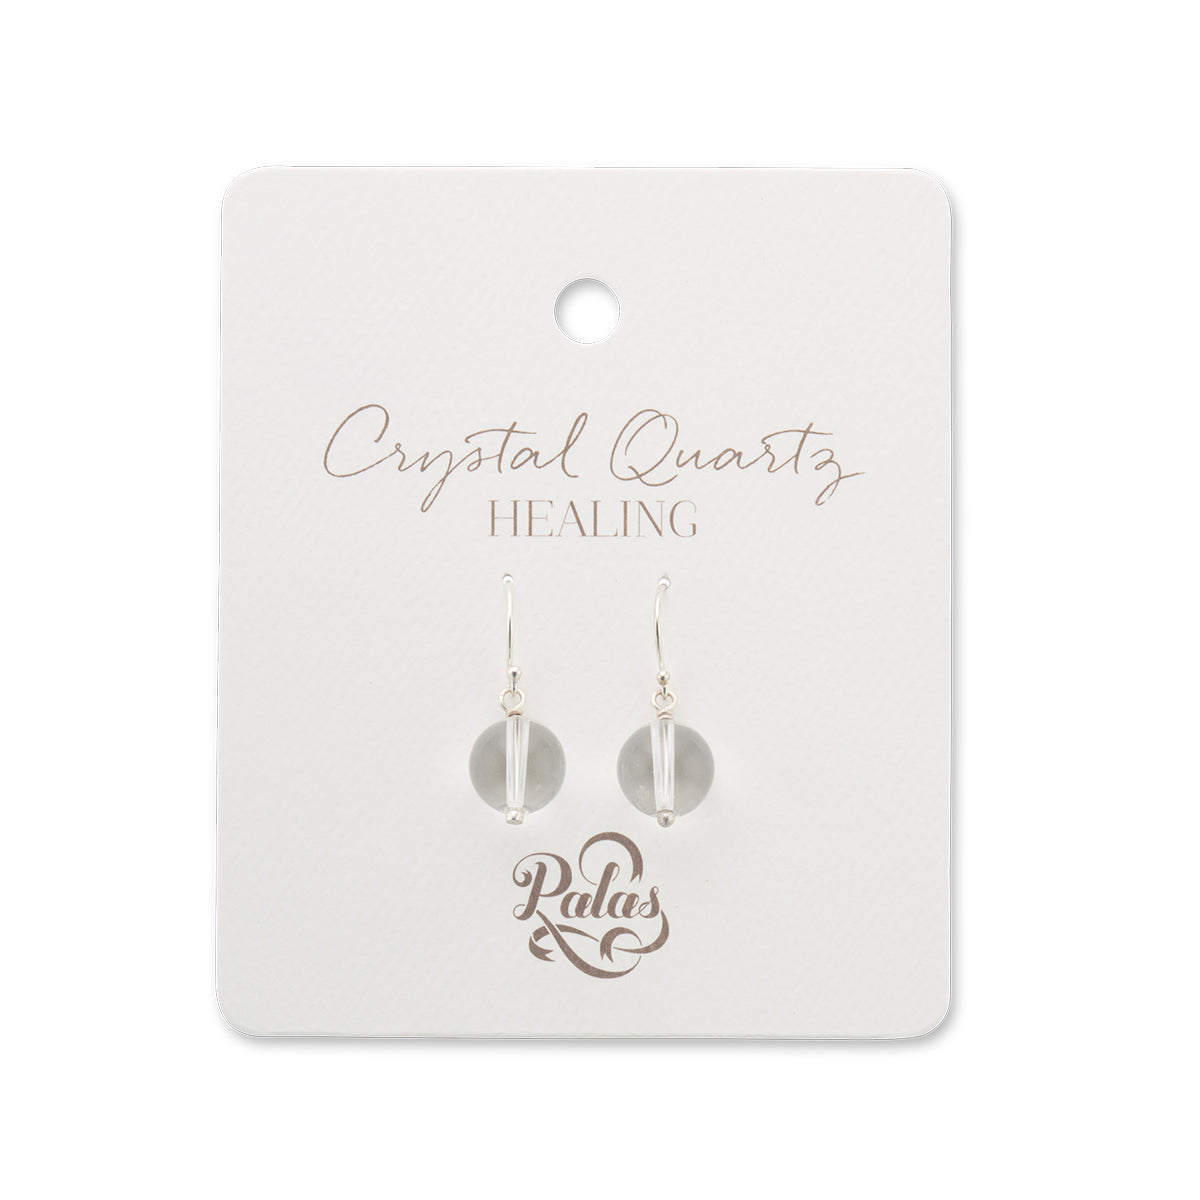 Crystal quartz healing gem earrings